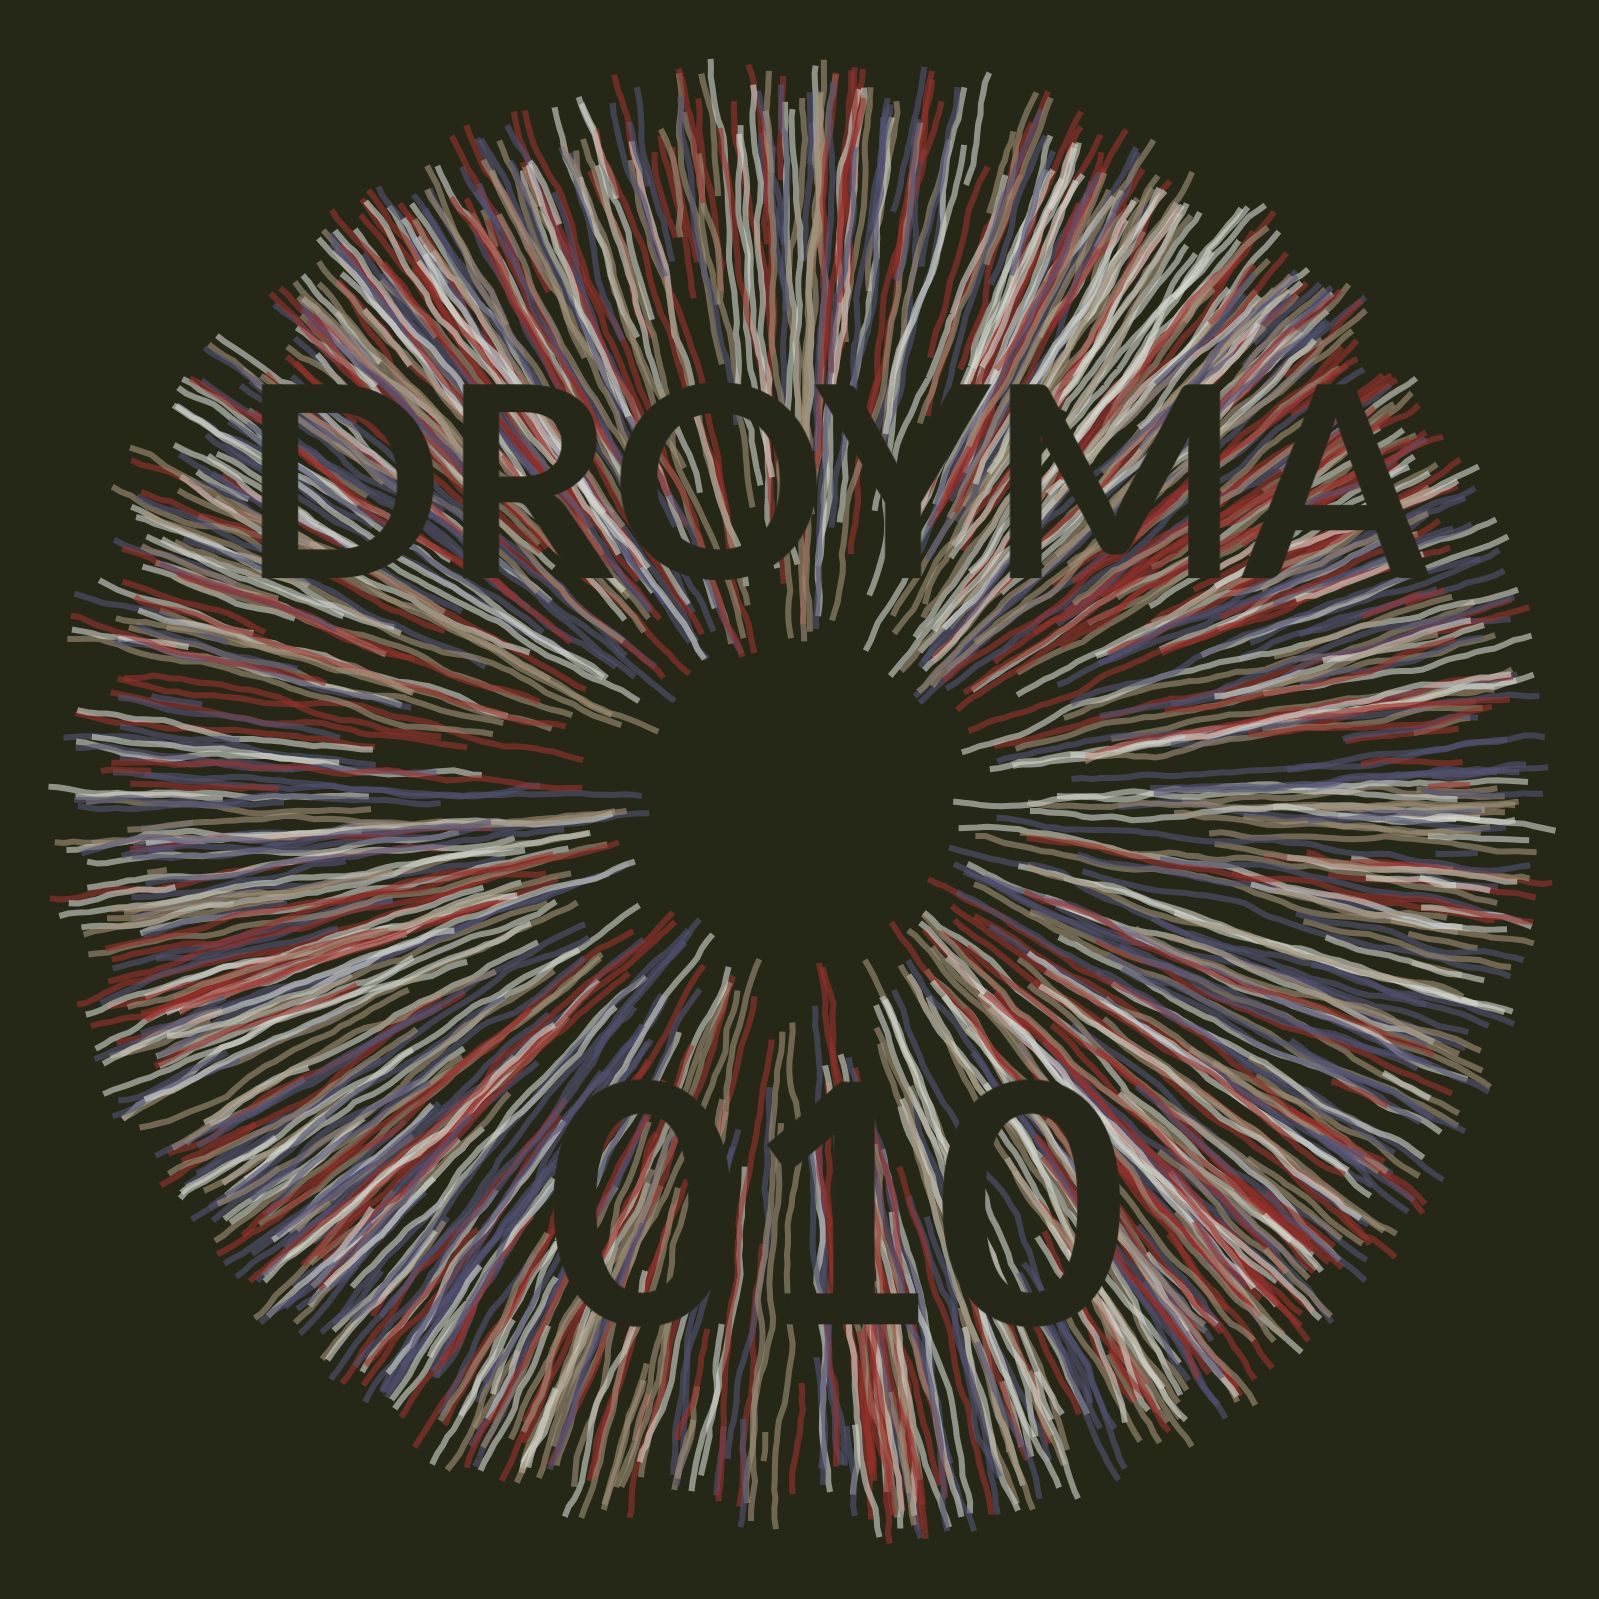 Stiahnuť ▼ Droyma Mix 010 - April 2019